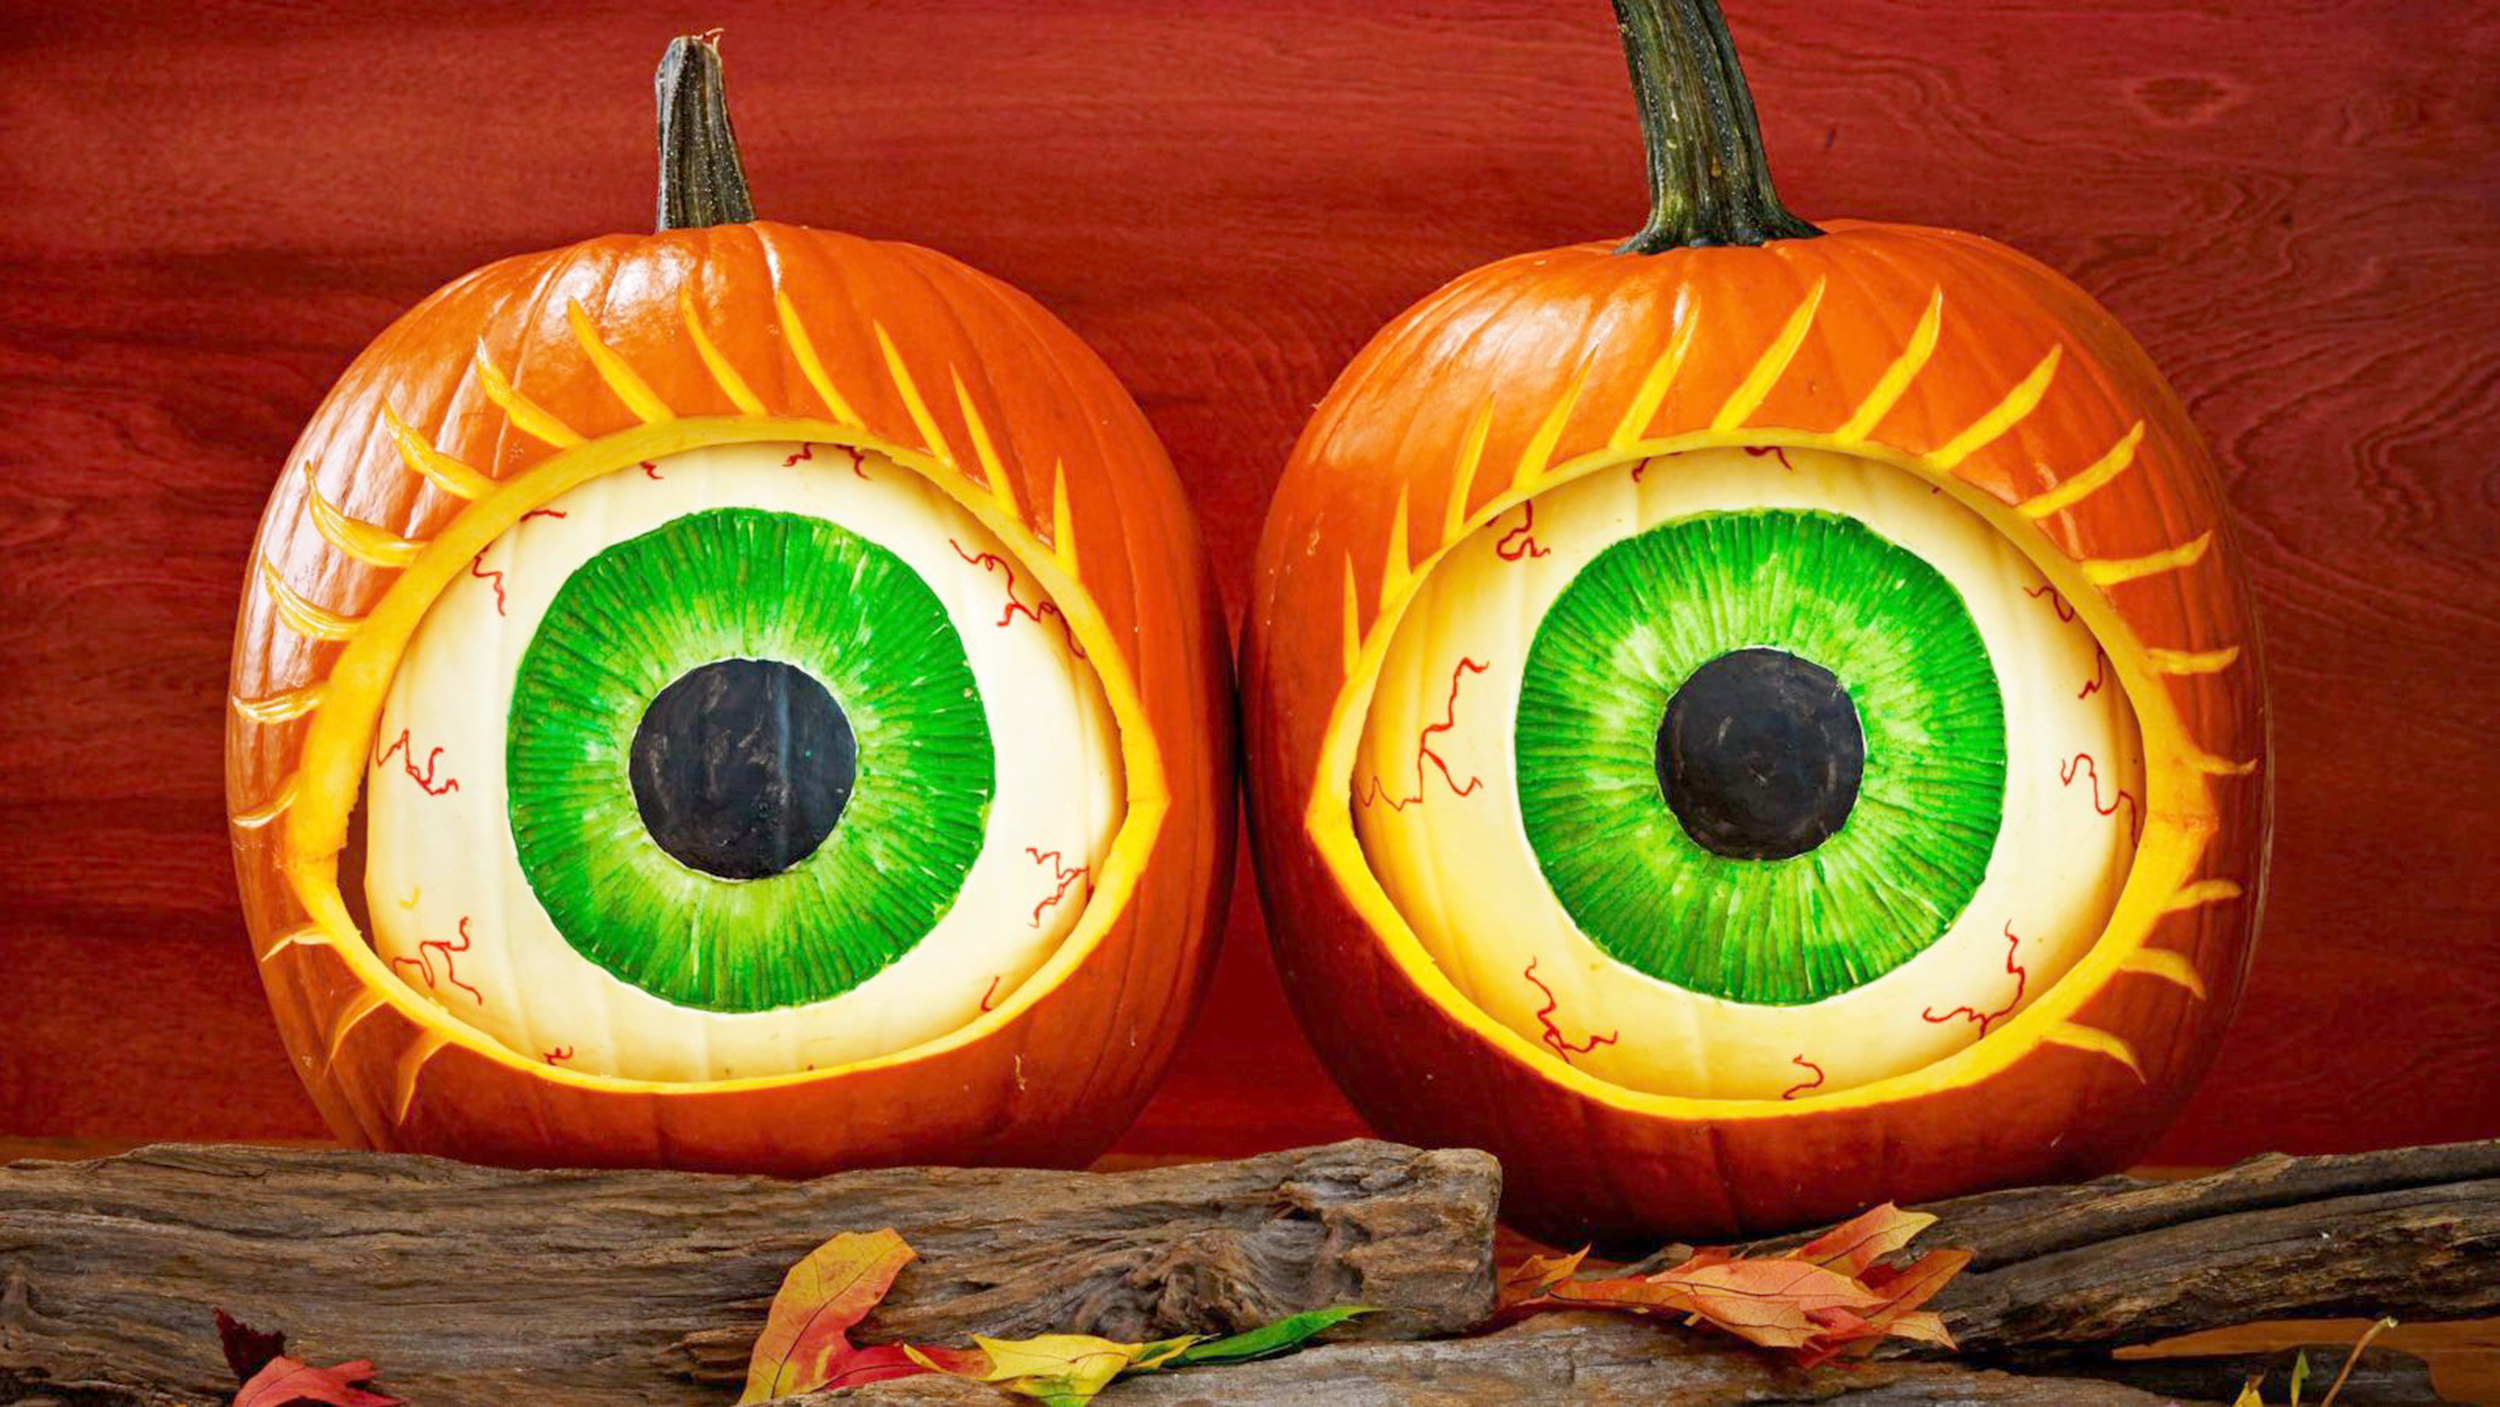 6 unique pumpkin carving ideas for Halloween